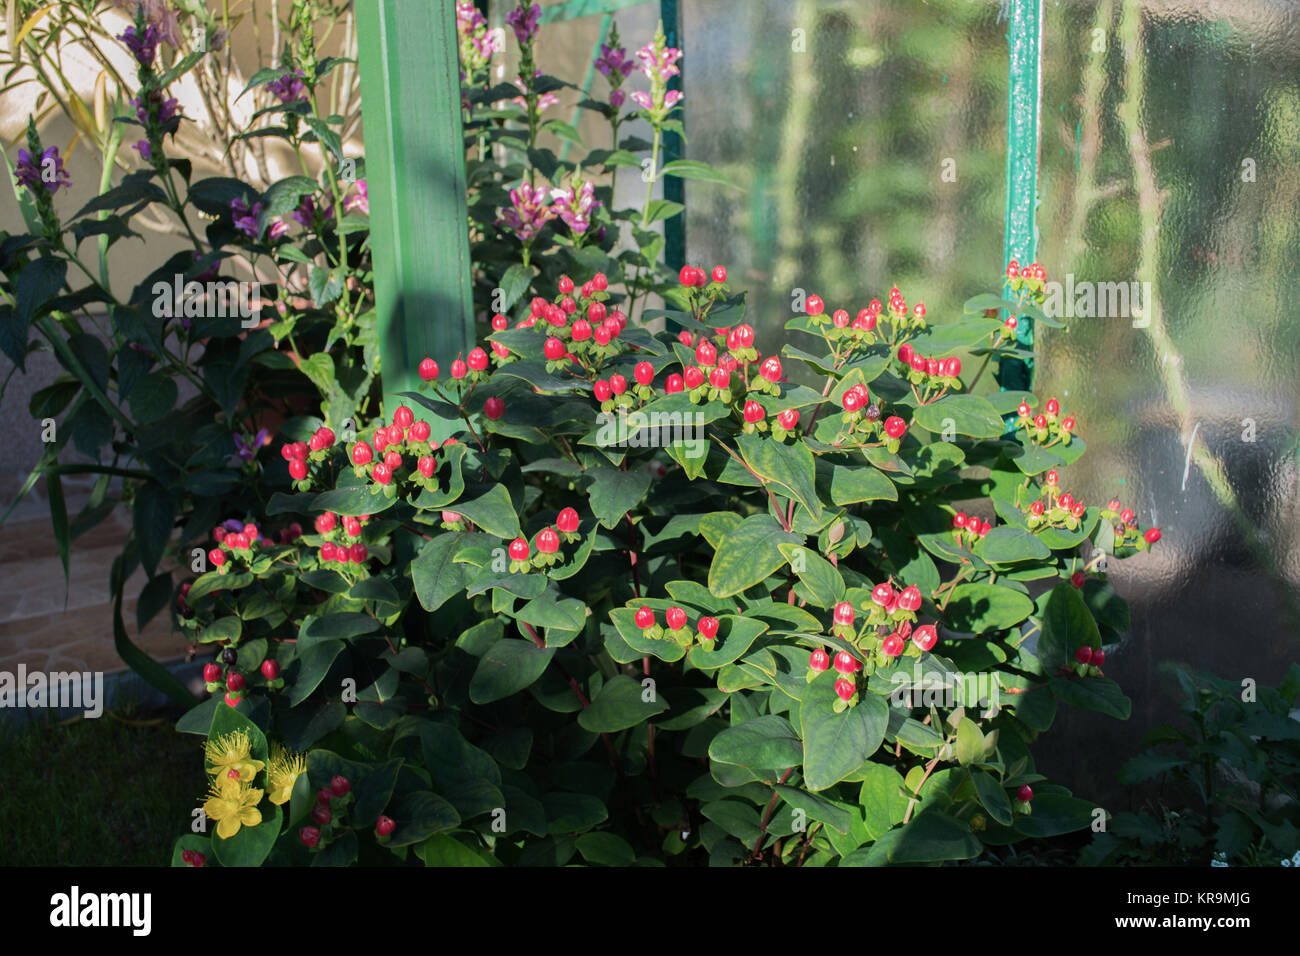 St John's wort - Hypericum Hidcote bush in the garden Stock Photo